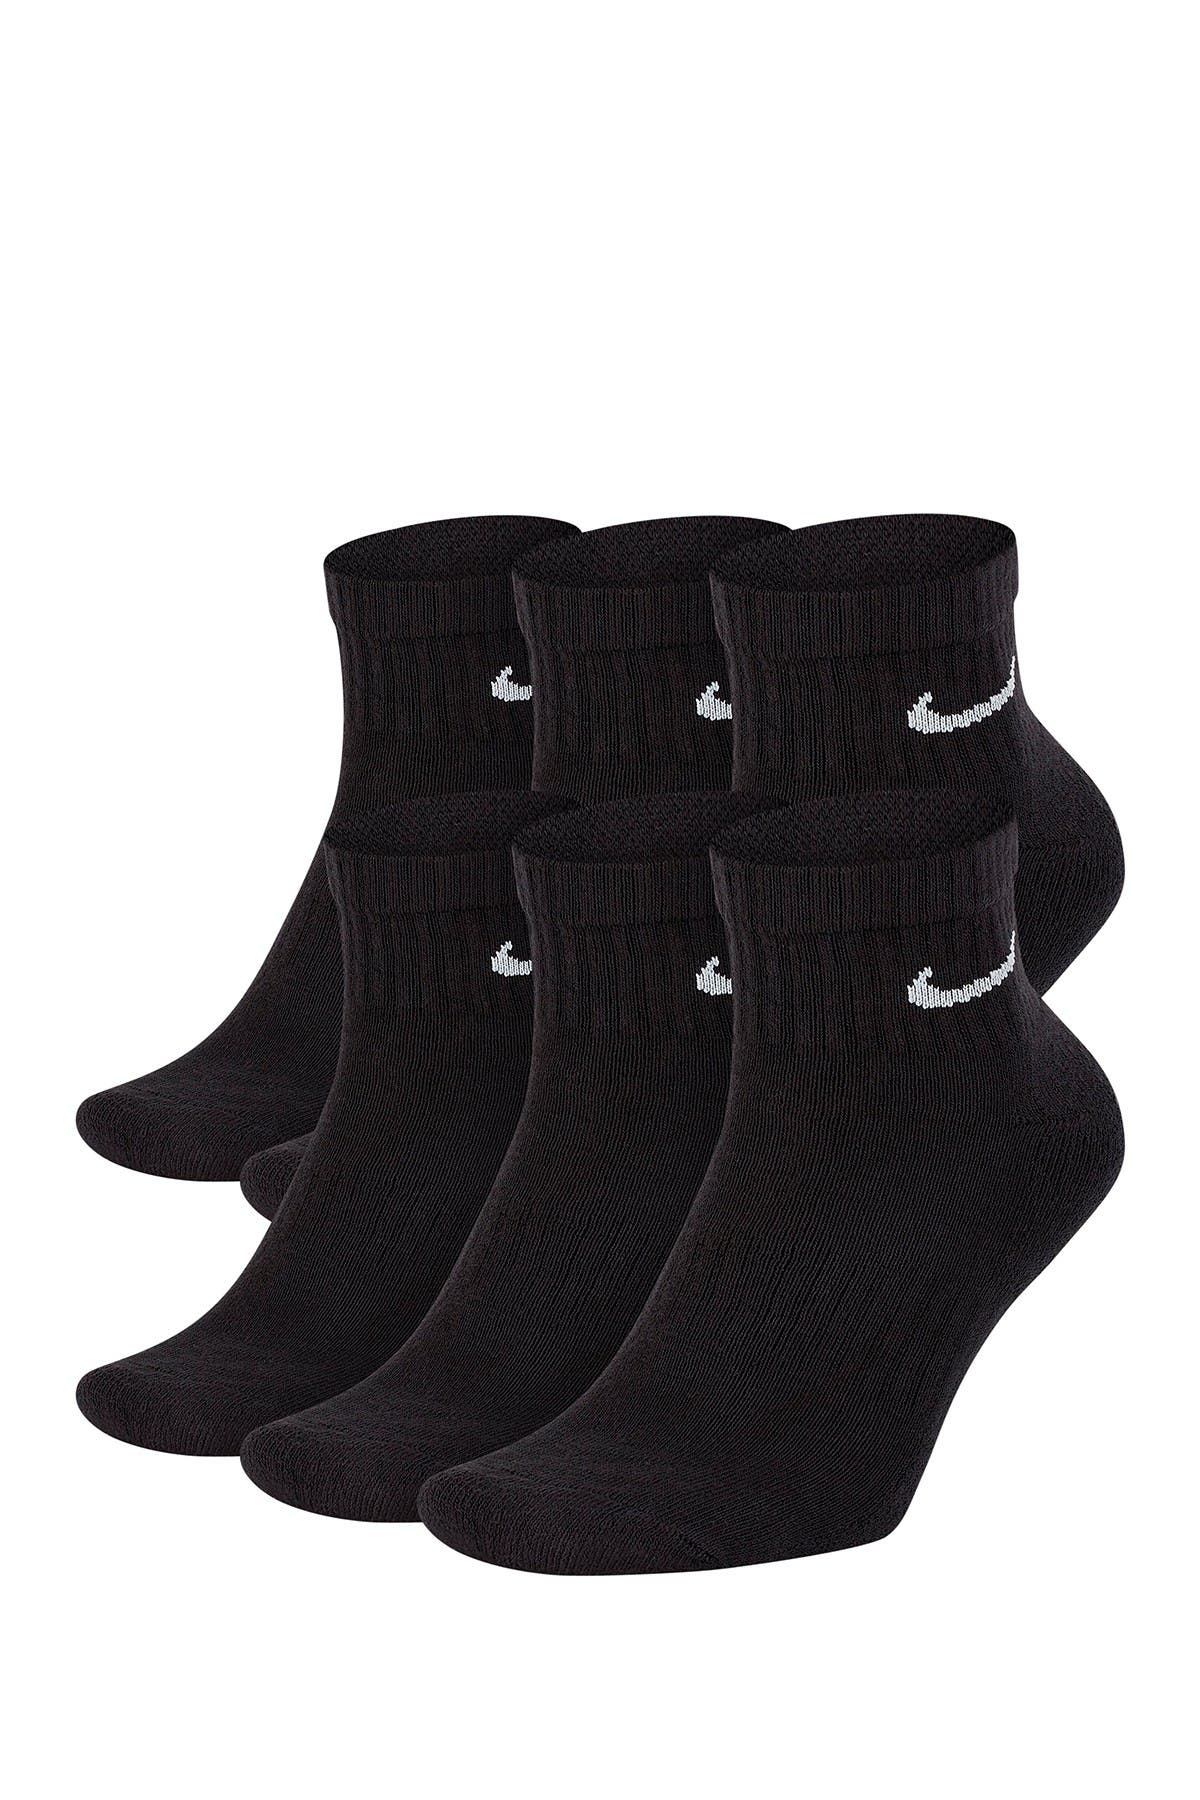 Nike | Everyday Cushion Socks - Pack of 